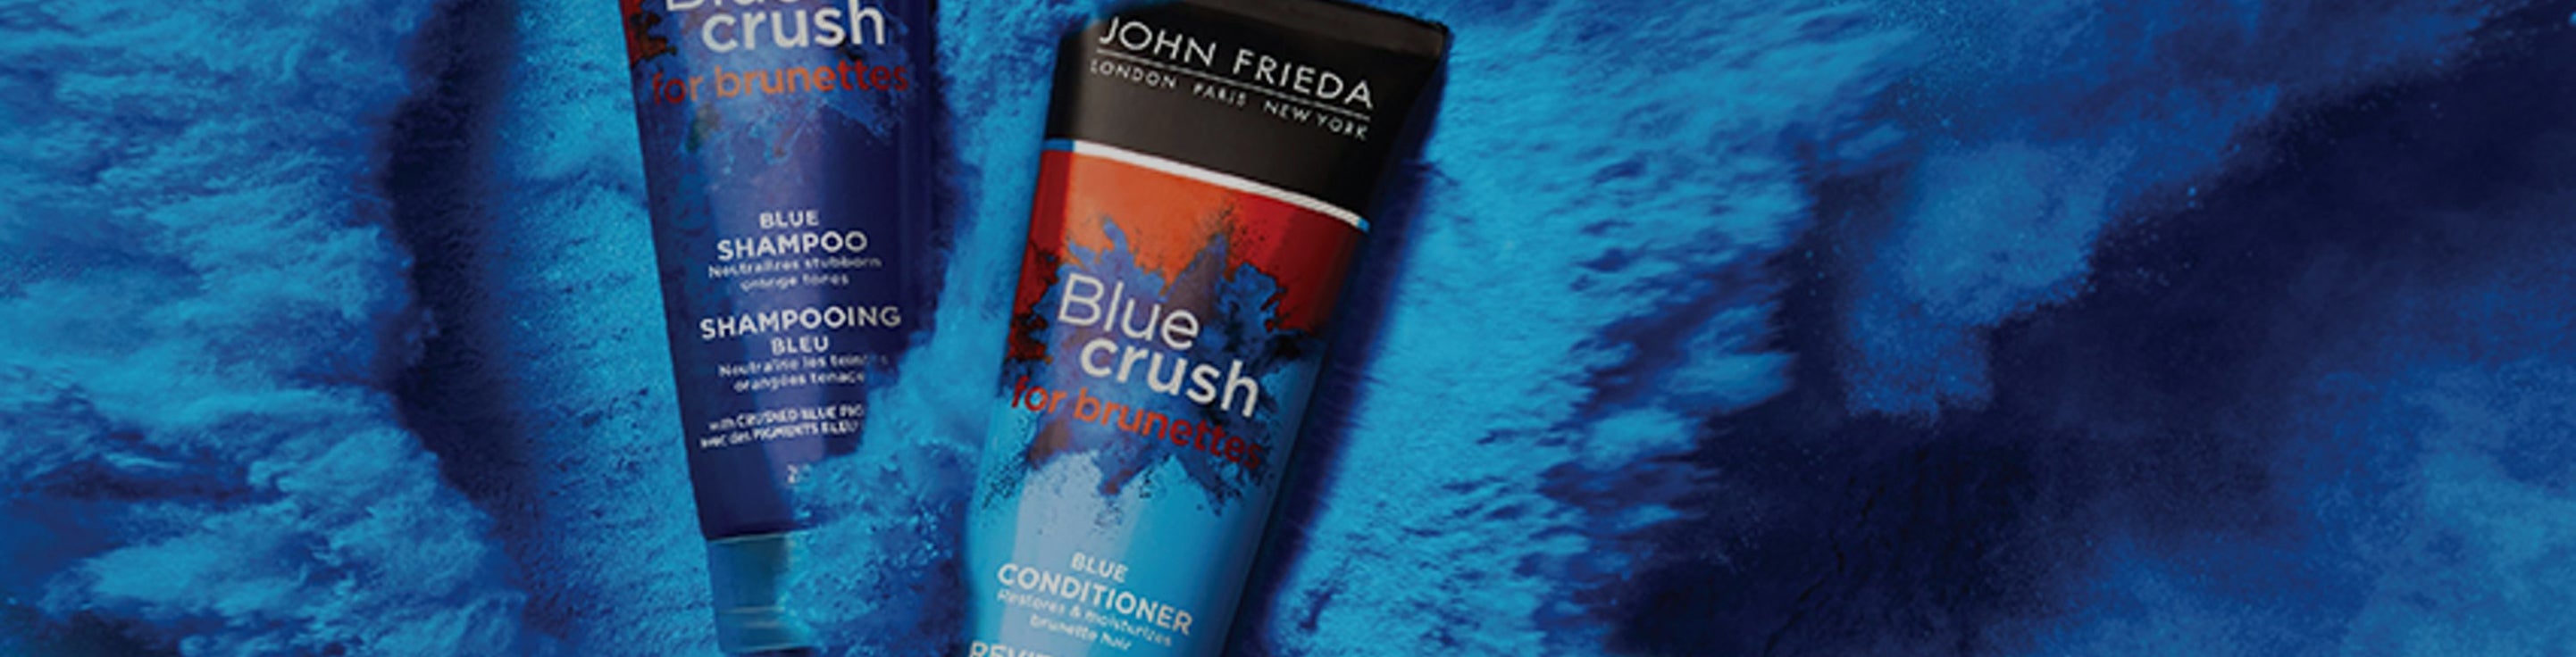 John Frieda - Blue Crush